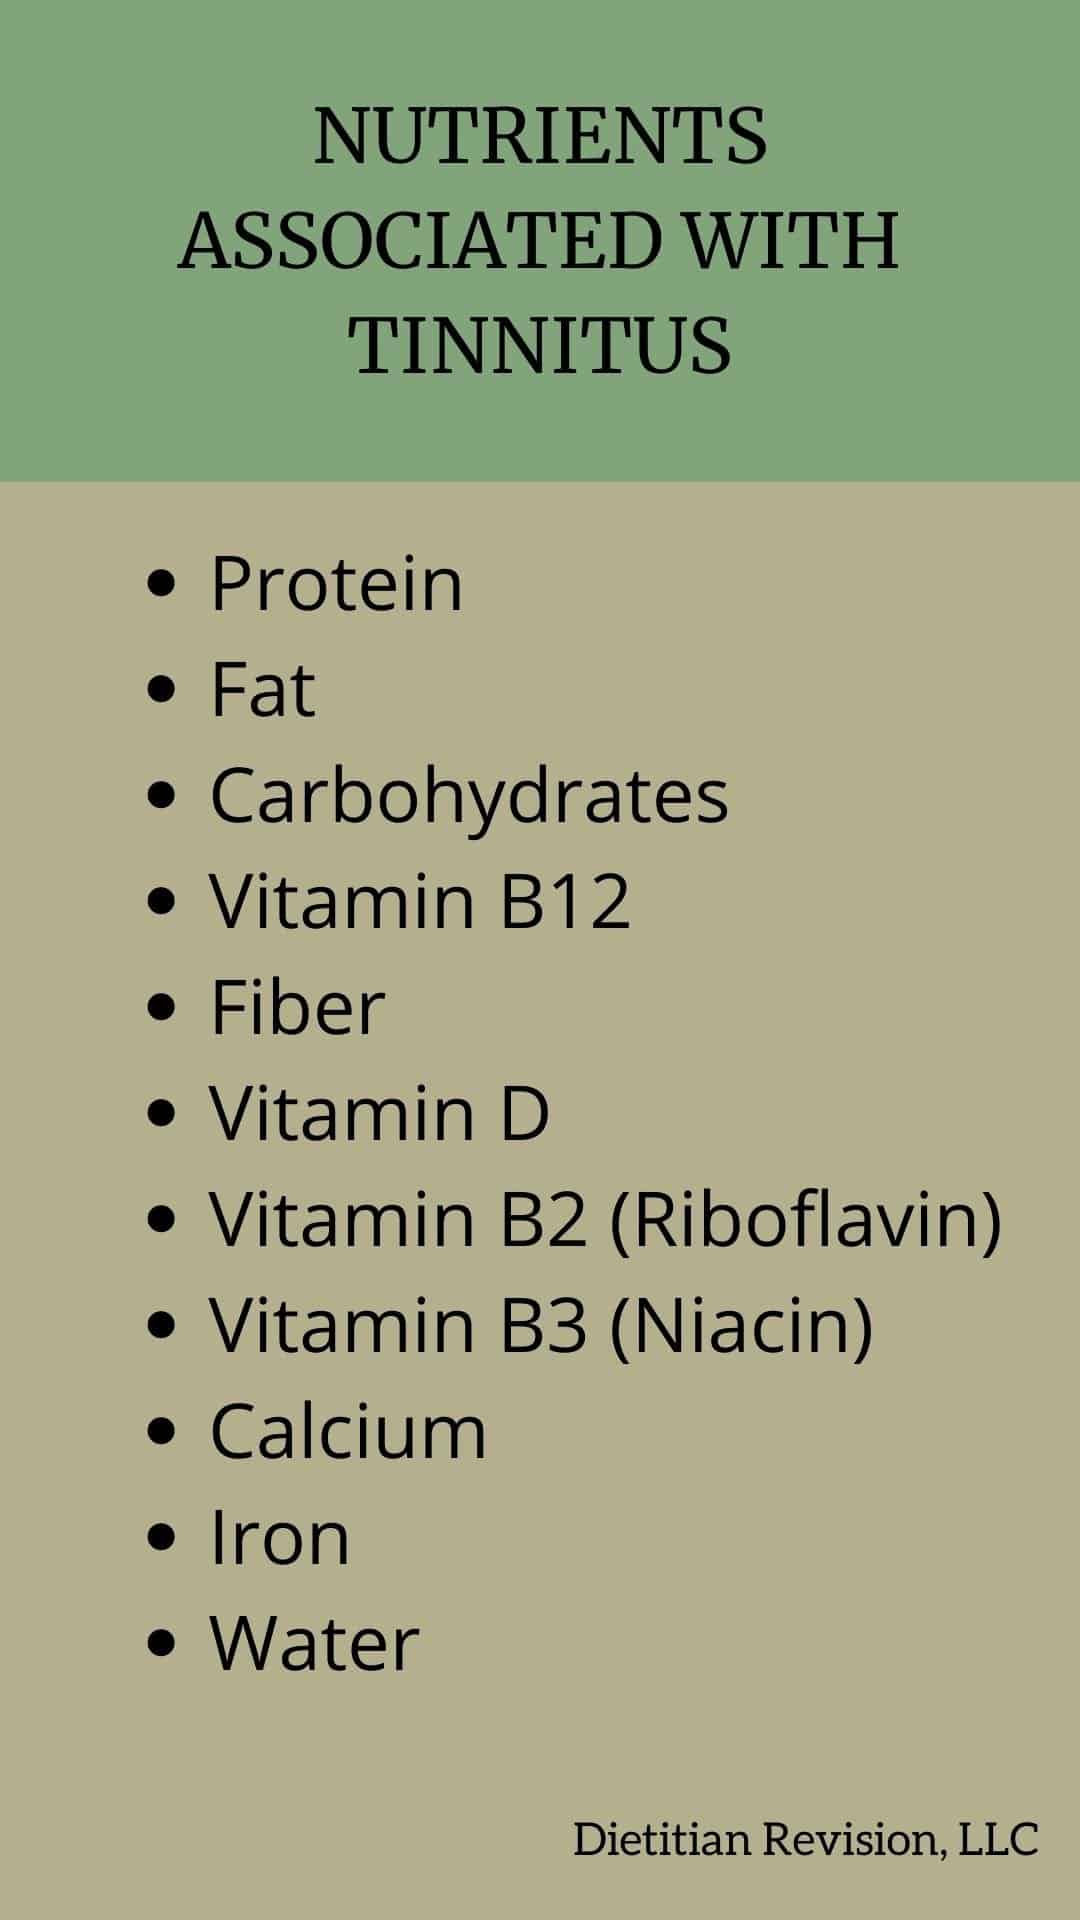 List of nutrients associated with tinnitus: protein, fat, carbohydrates, vitamin B12, fiber, vitamin D, vitamin B2, vitamin B3, calcium, iron, water